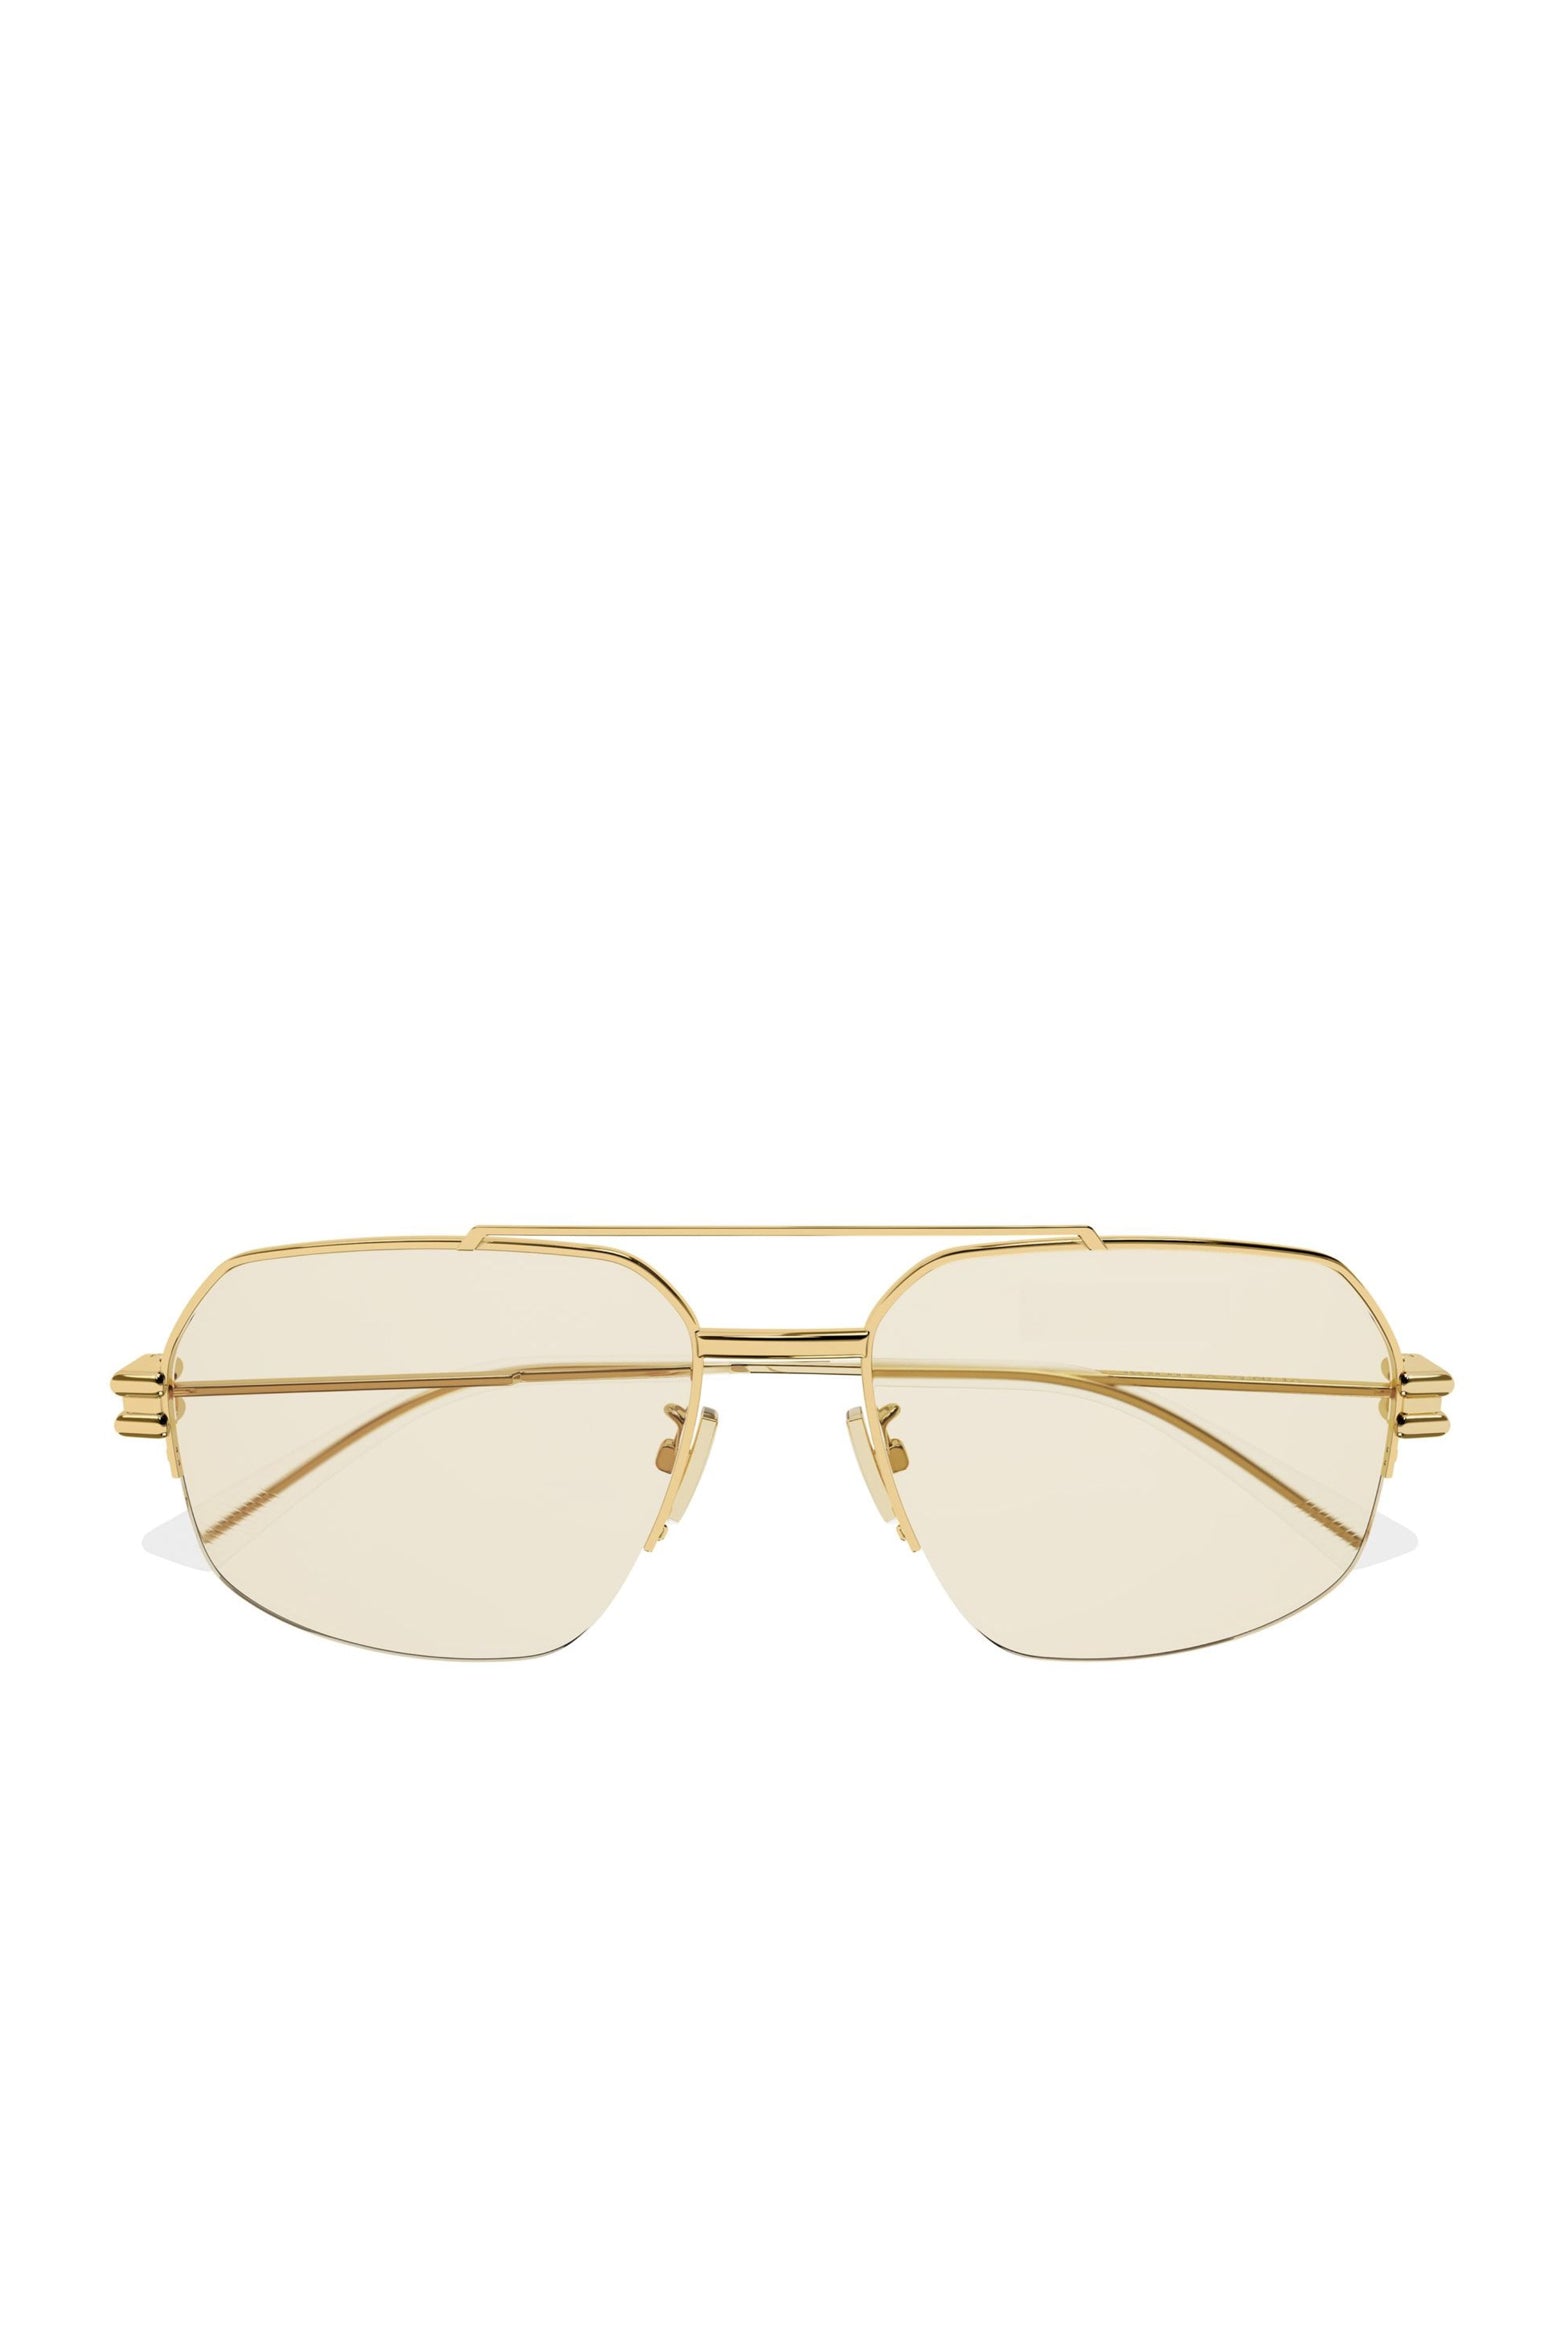 Bottega Veneta Bond Metal Sunglasses in Gold available at TNT The New Trend Australia